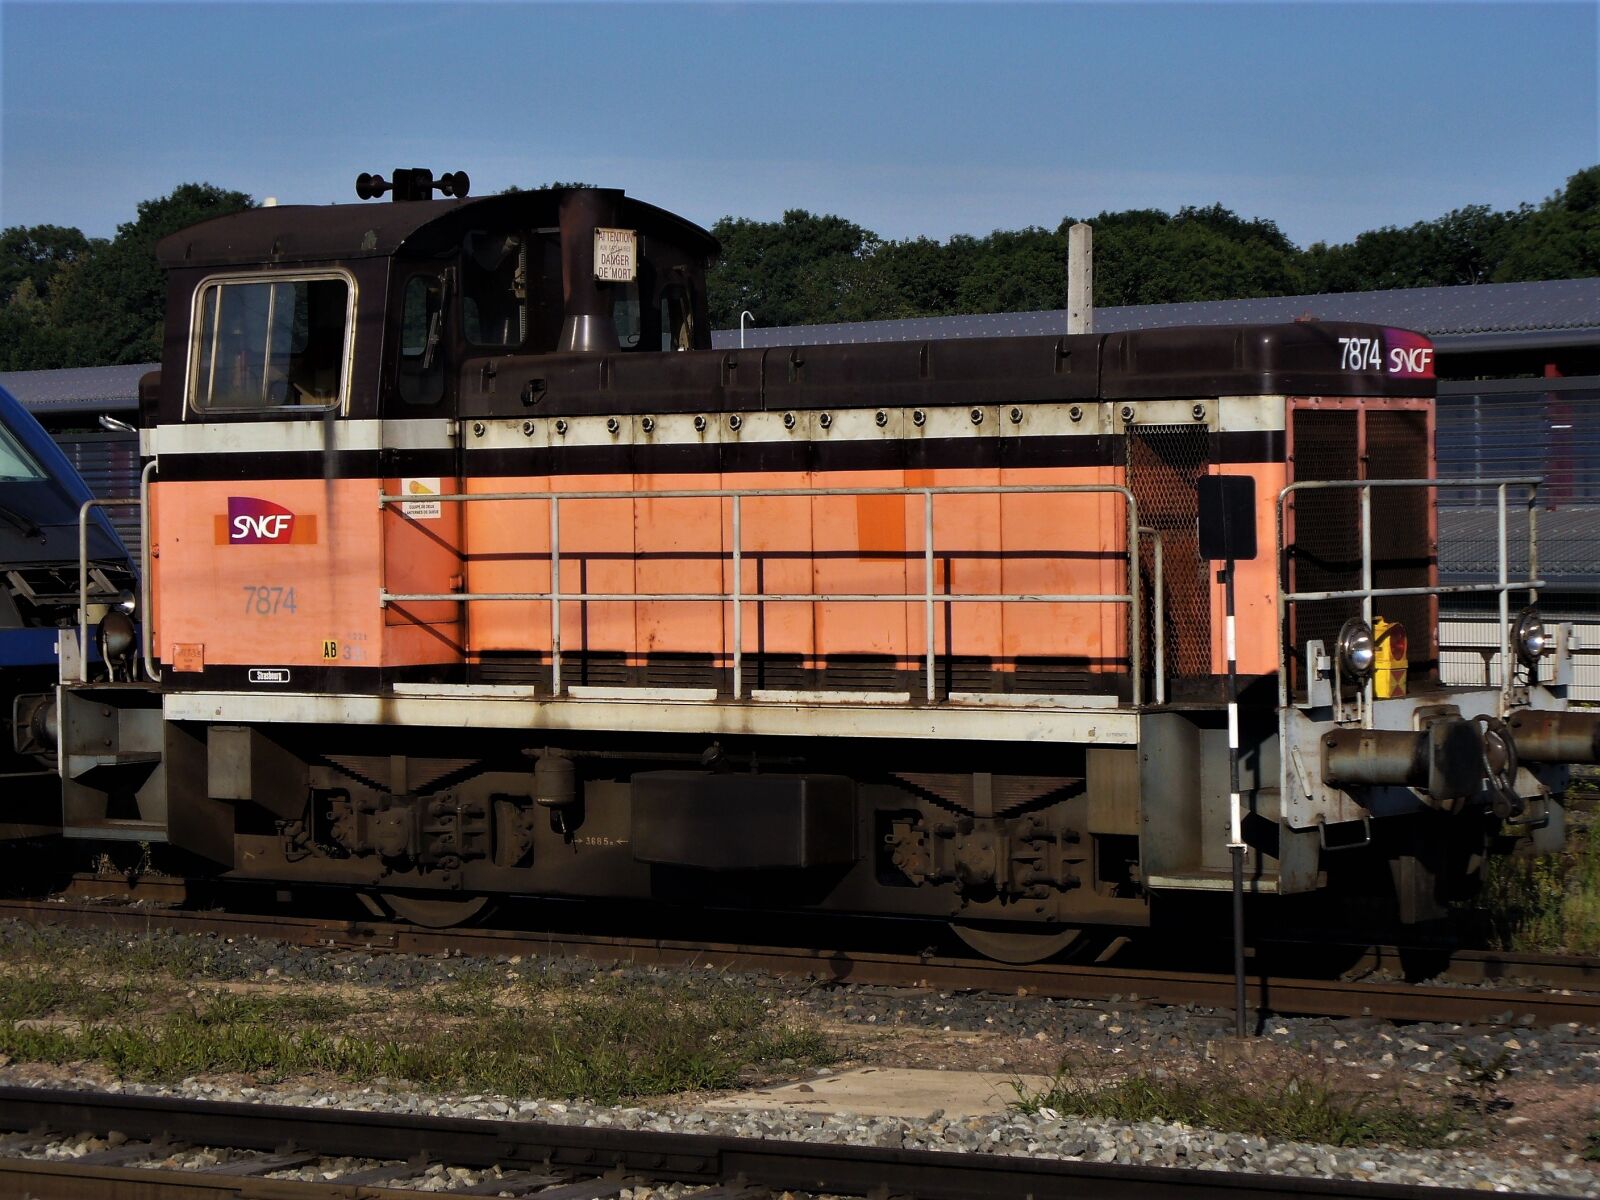 Panasonic DMC-LZ5 sample photo. Transport, train, track photography